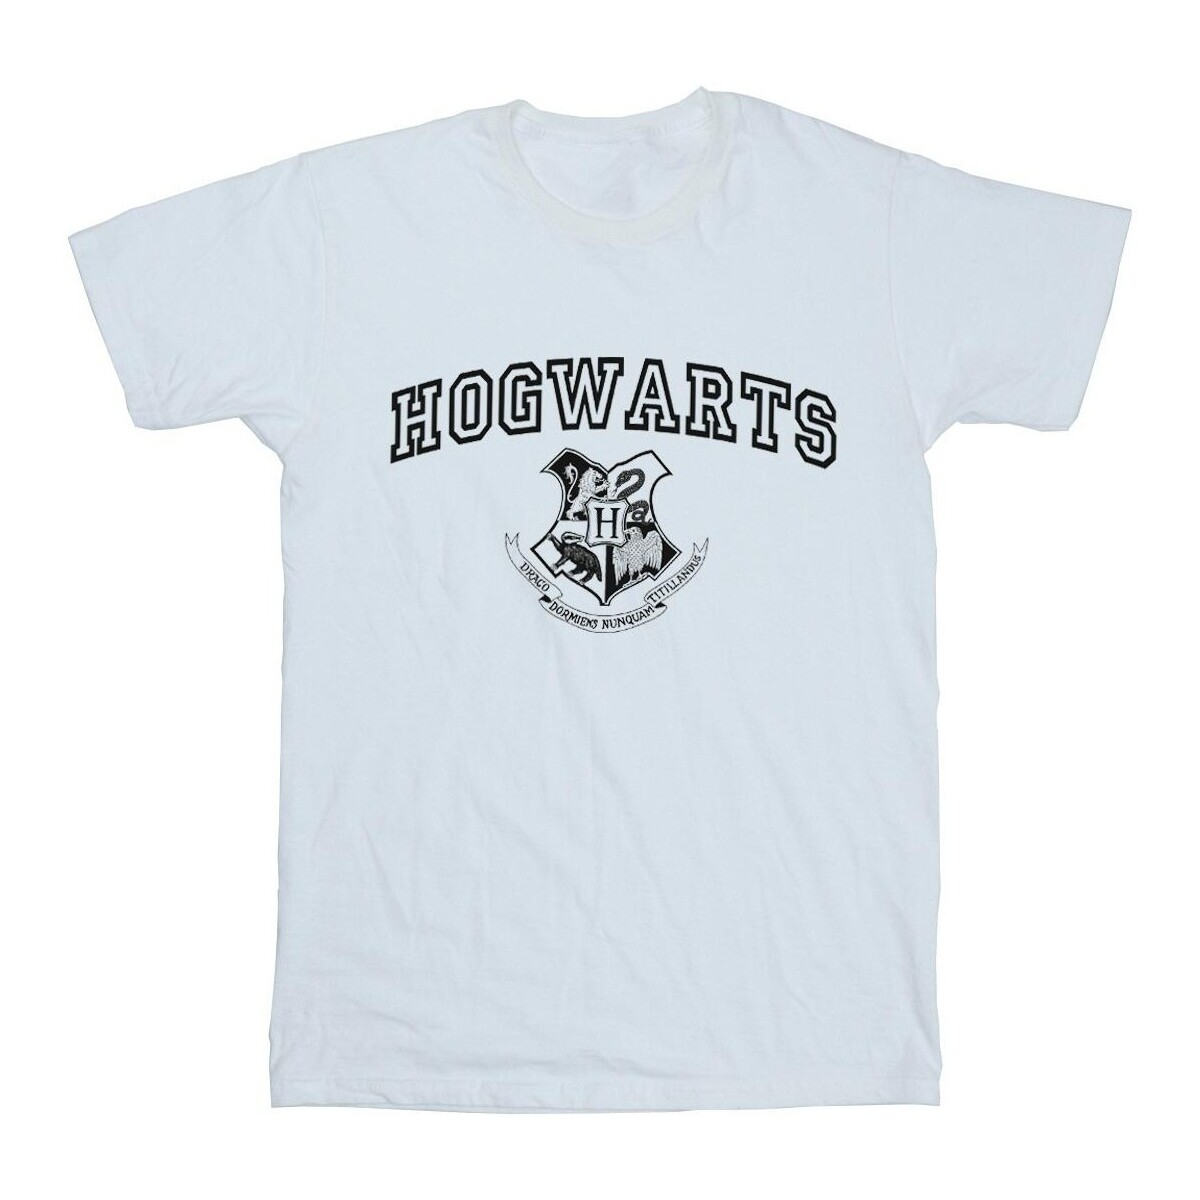 textil Mujer Camisetas manga larga Harry Potter Hogwarts Crest Blanco